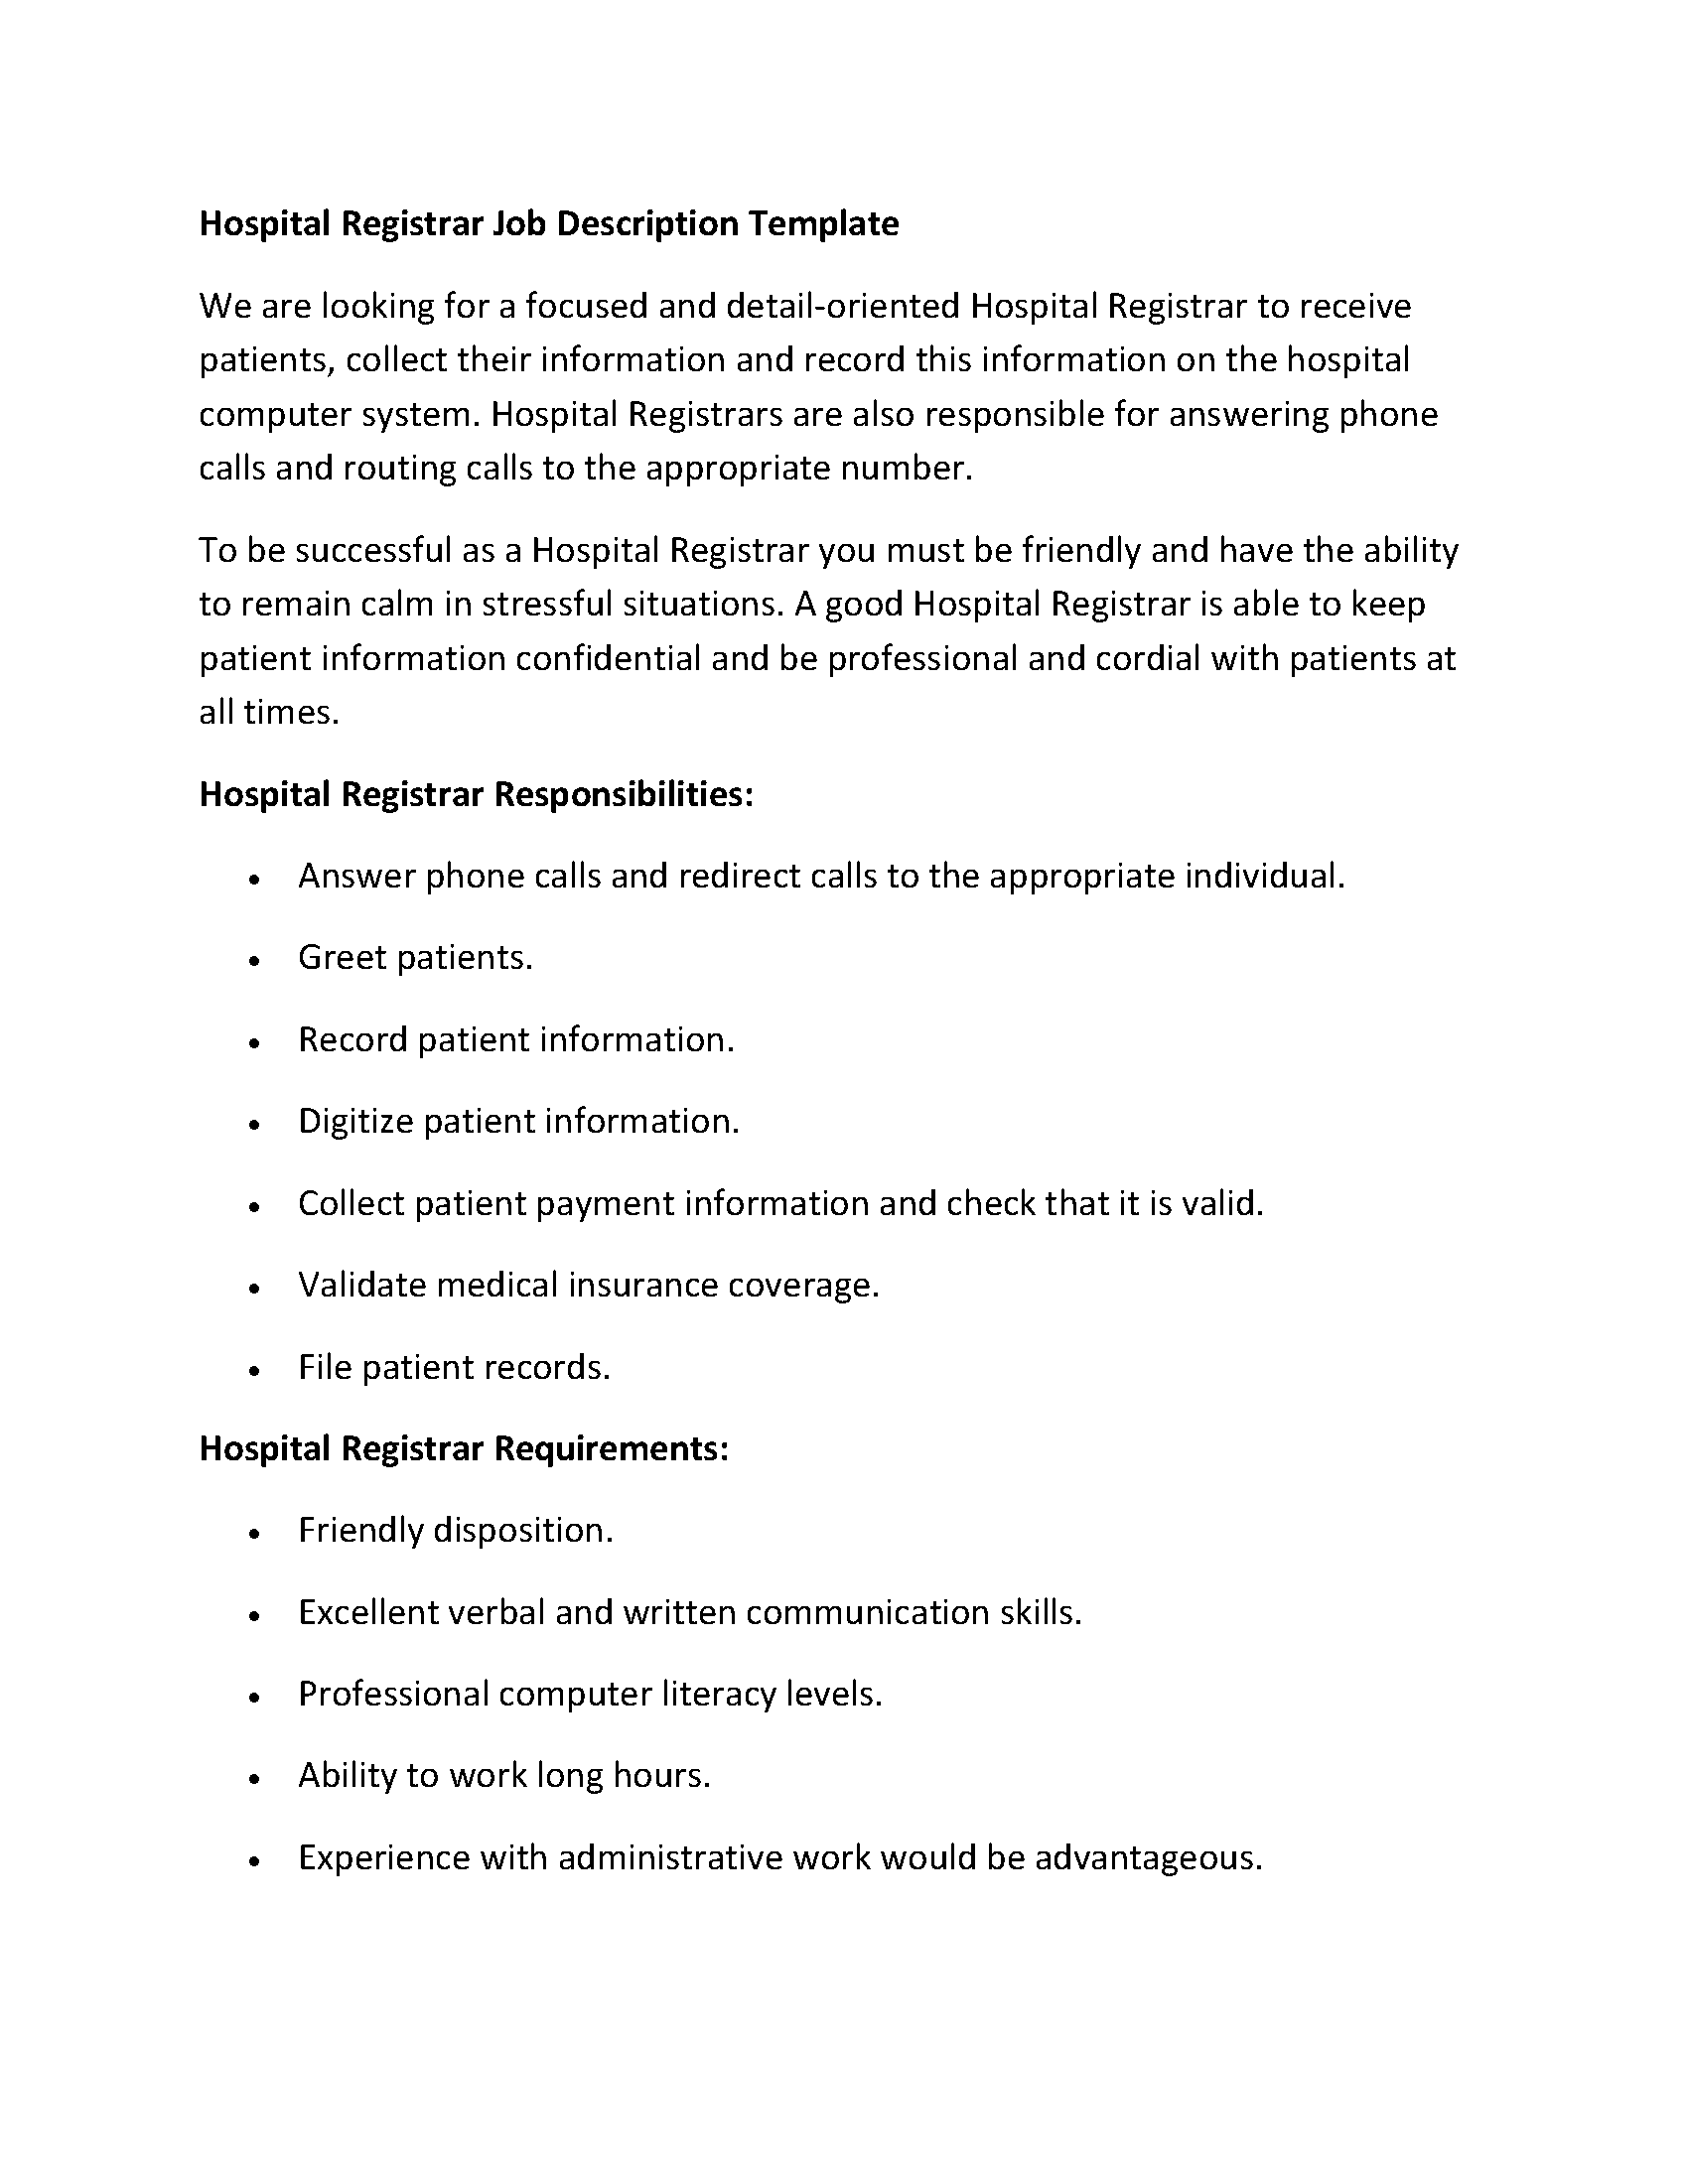 Hospital Registrar Job Description Template